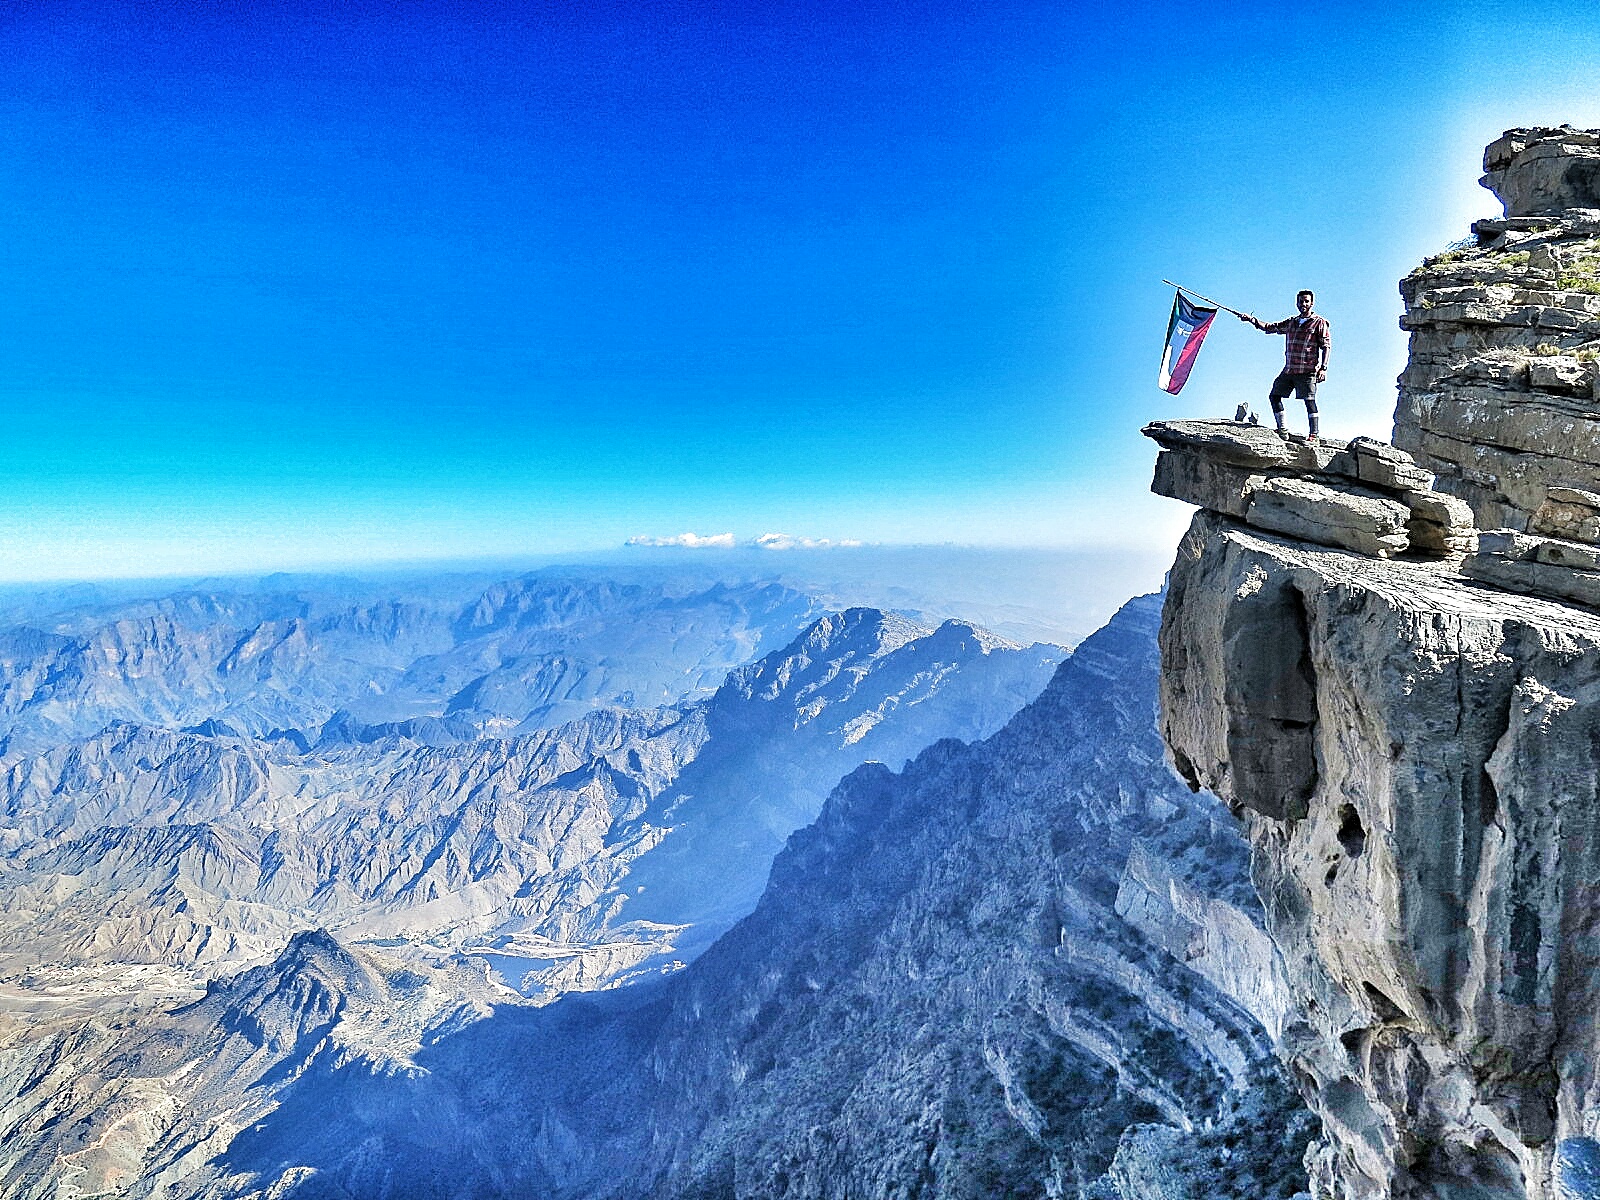 Abdullah Al-Shahin  climbing Jebel Shams - the highest mountain in Oman and the Gulf region